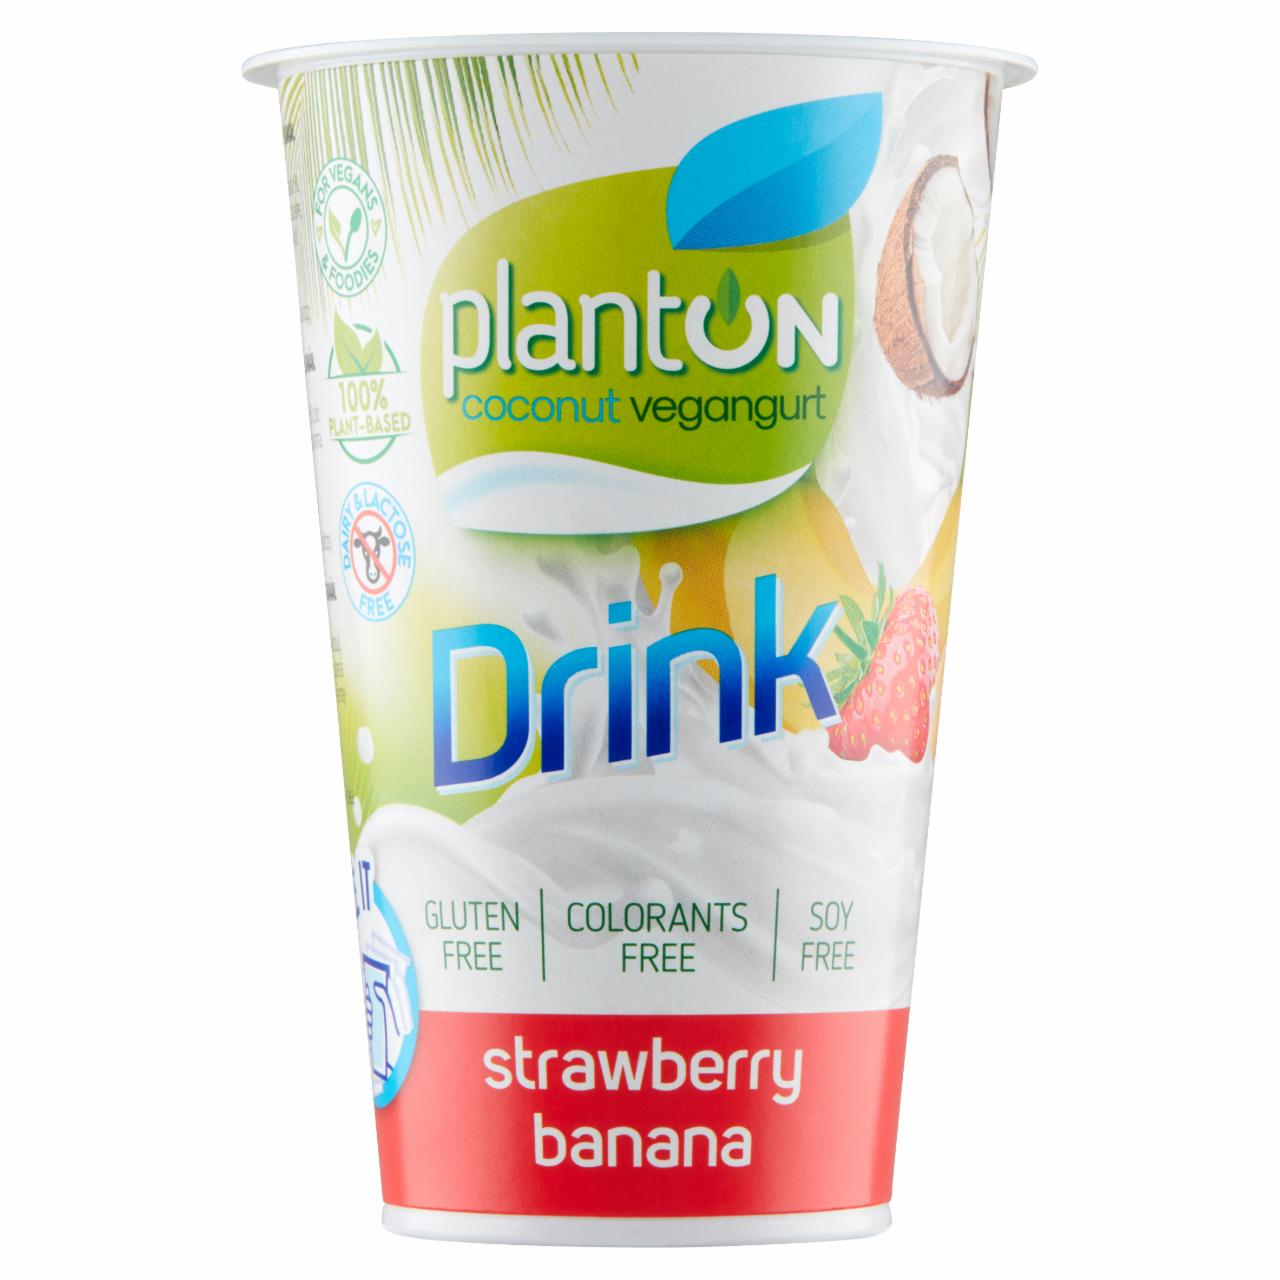 Zdjęcia - Planton Kokosowy vegangurt truskawka & banan 200 g